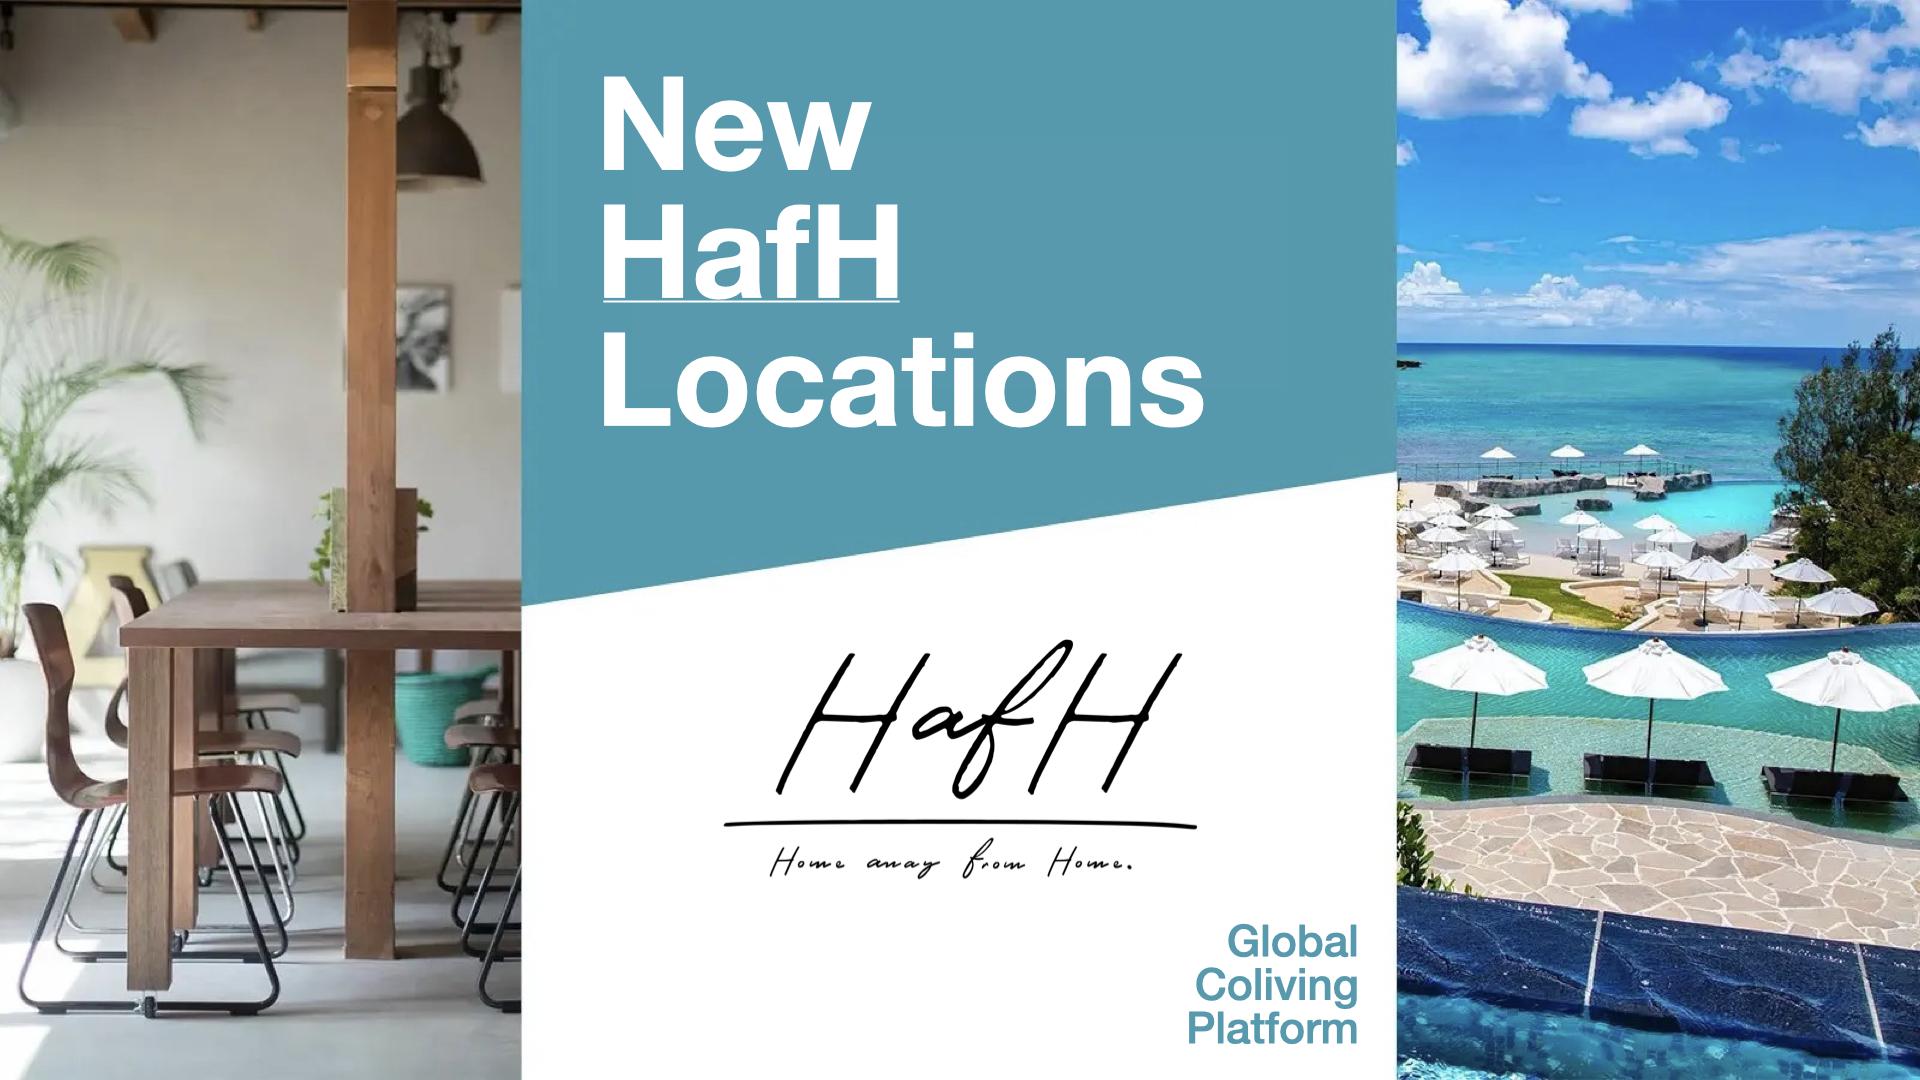 New HafH Locations!